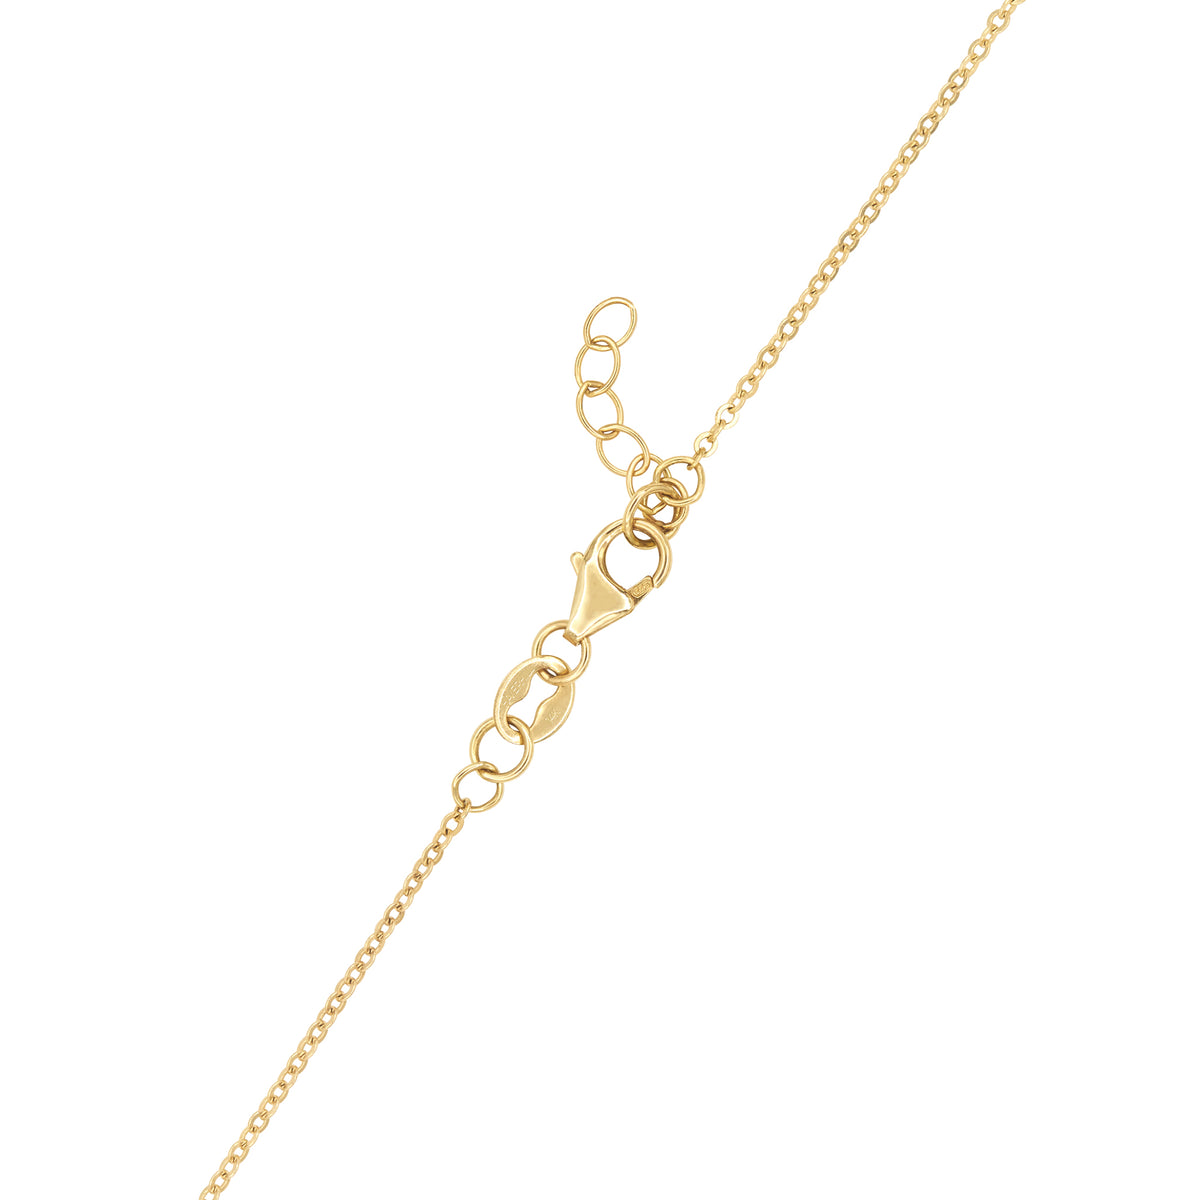 14K Gold Bracelet with Sapphire Clasp – Tory's Jewelry